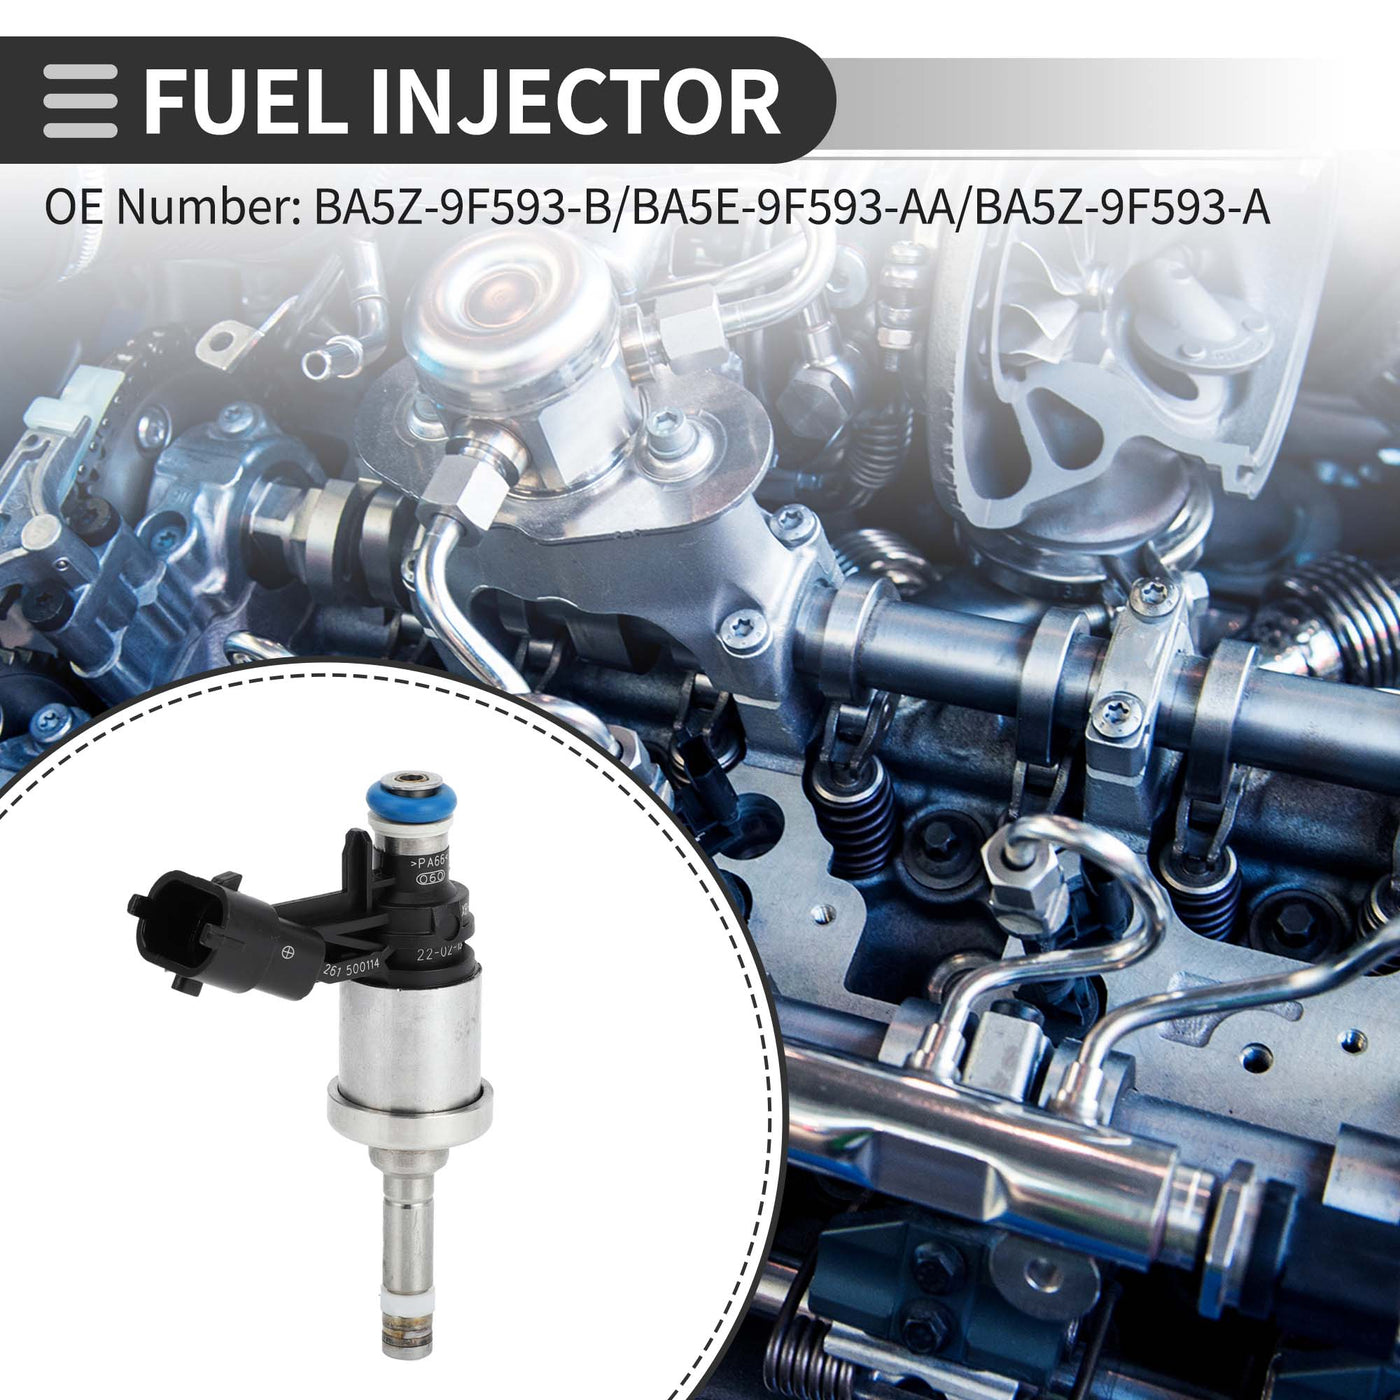 Motoforti Fuel Injector, Fuel Injection Nozzle, for Ford Explorer 2012-2015 3.5L, Plastic, No.BA5Z-9F593-B, Black